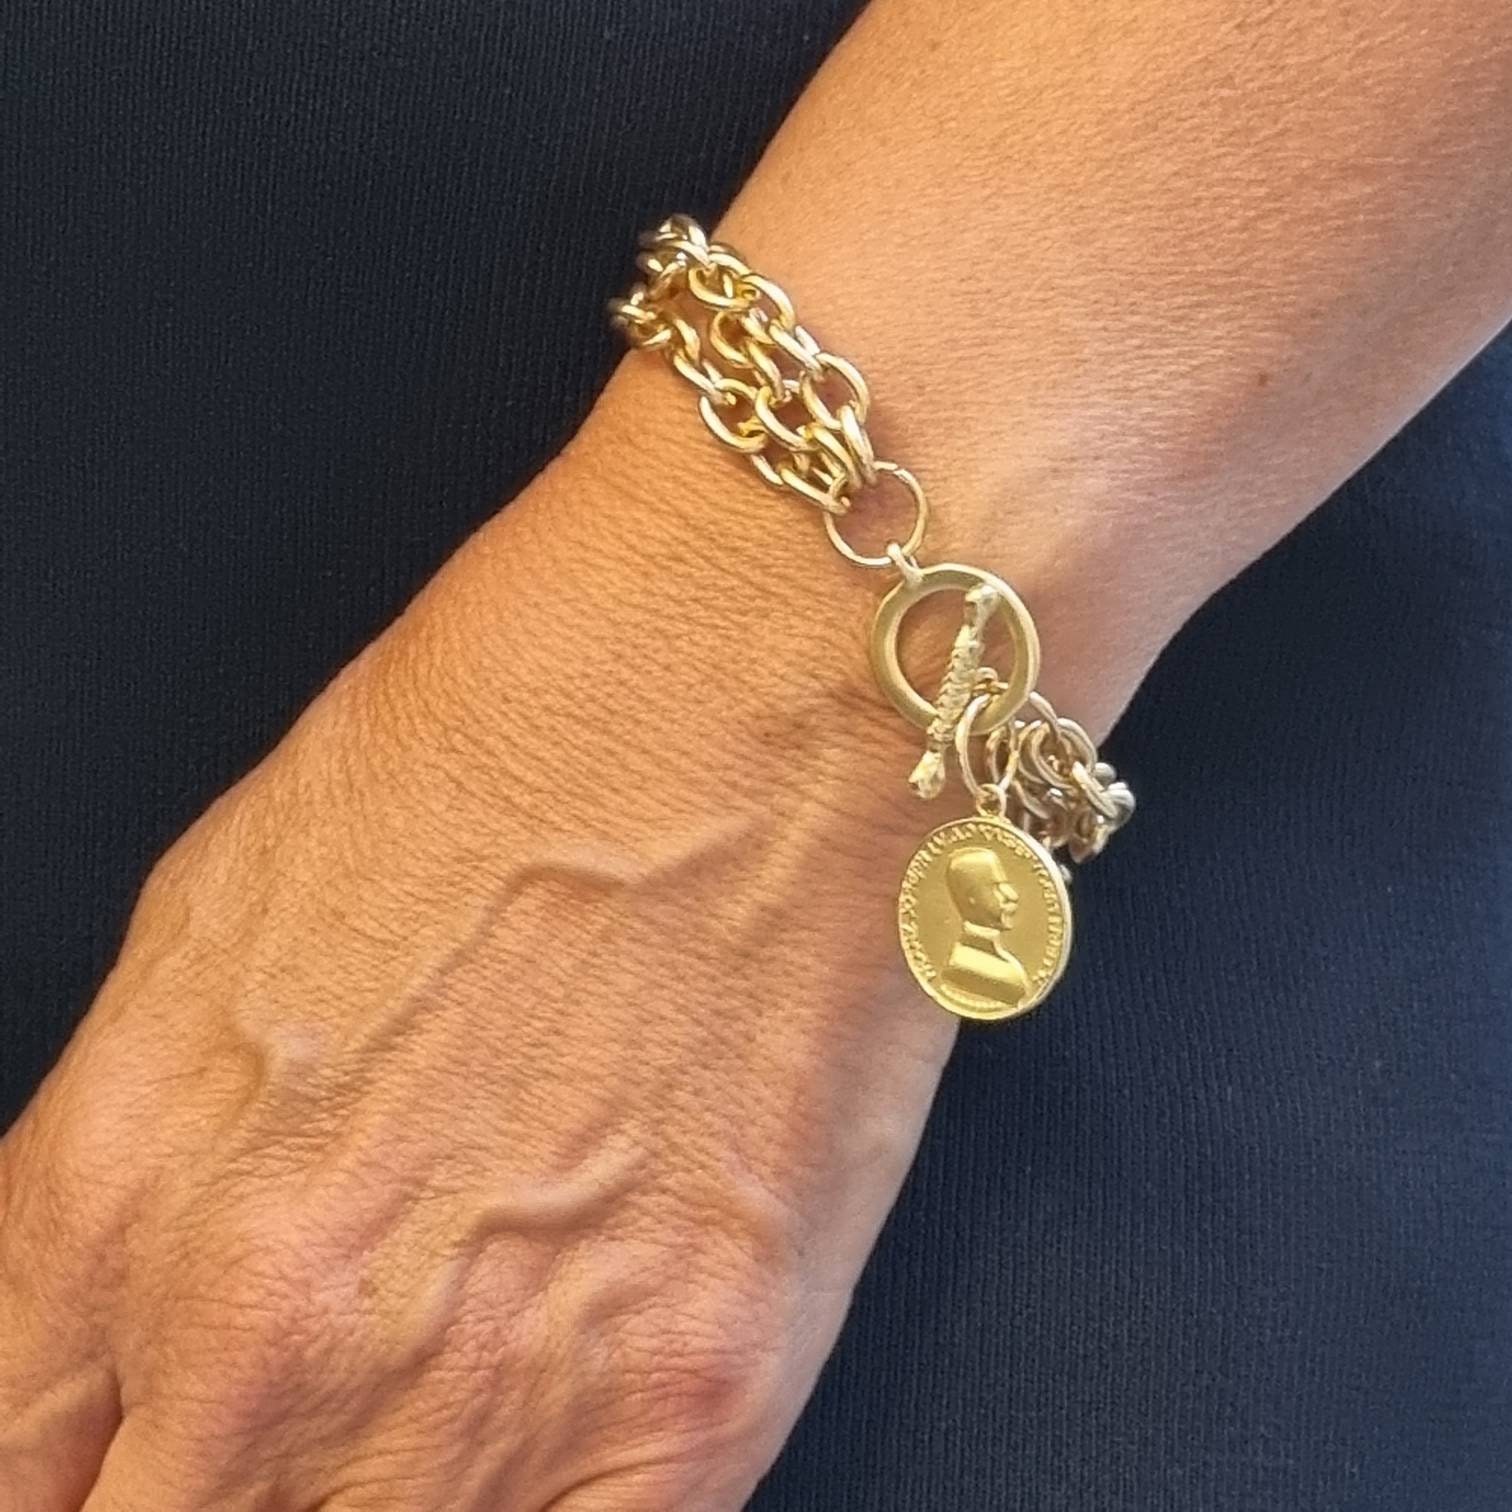 Elizabeth & James Silver Gold Coin Charm Bracelet | Coin charm bracelet,  Silver, Silver chain bracelet